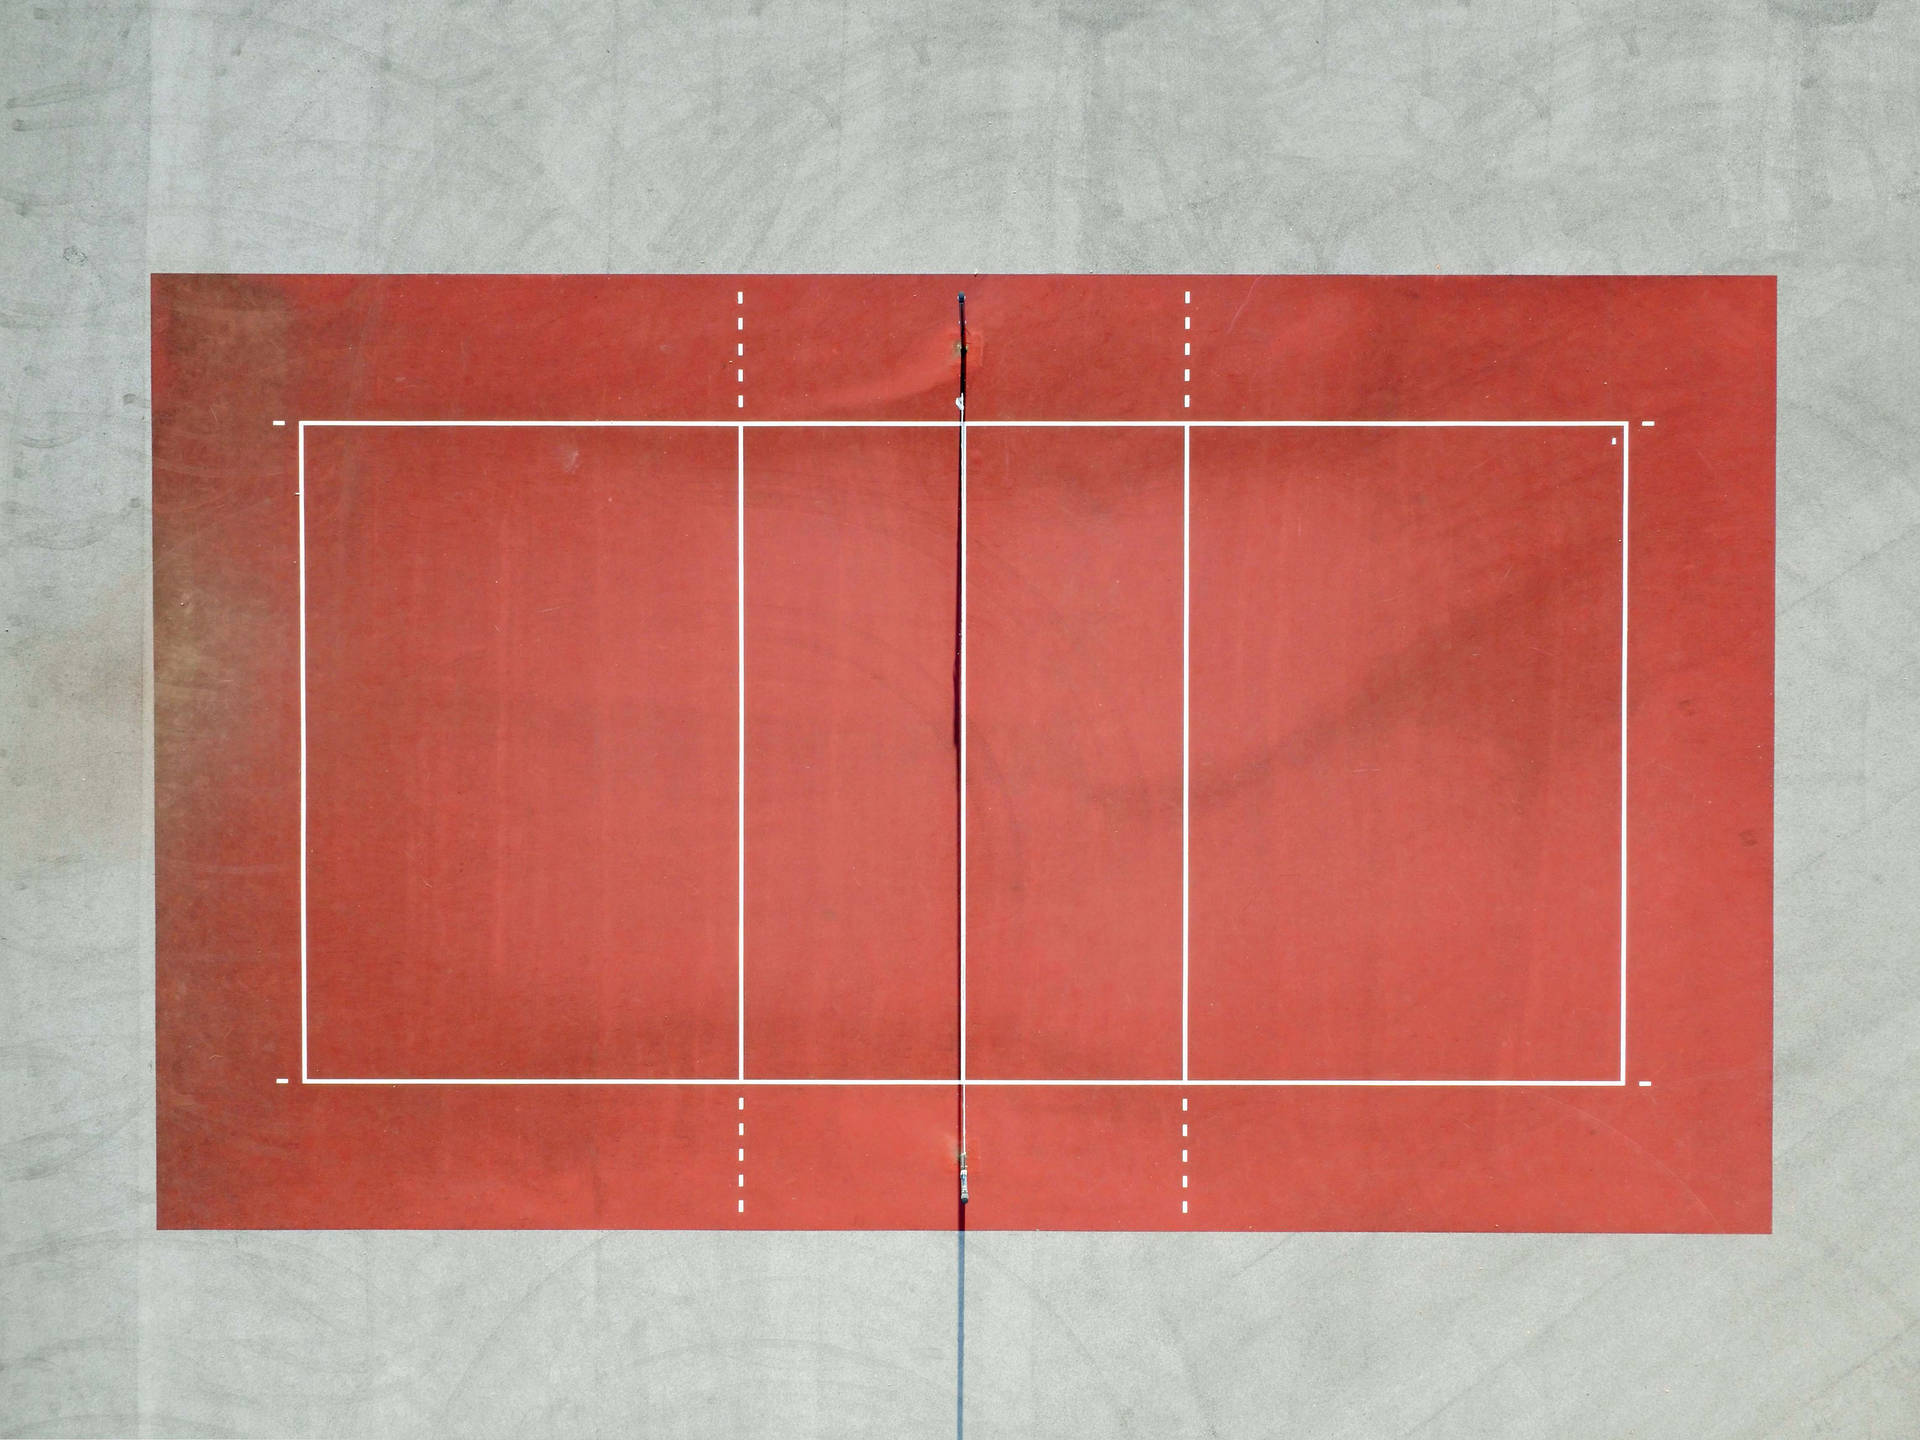 Red Court Volleyball 4k Background